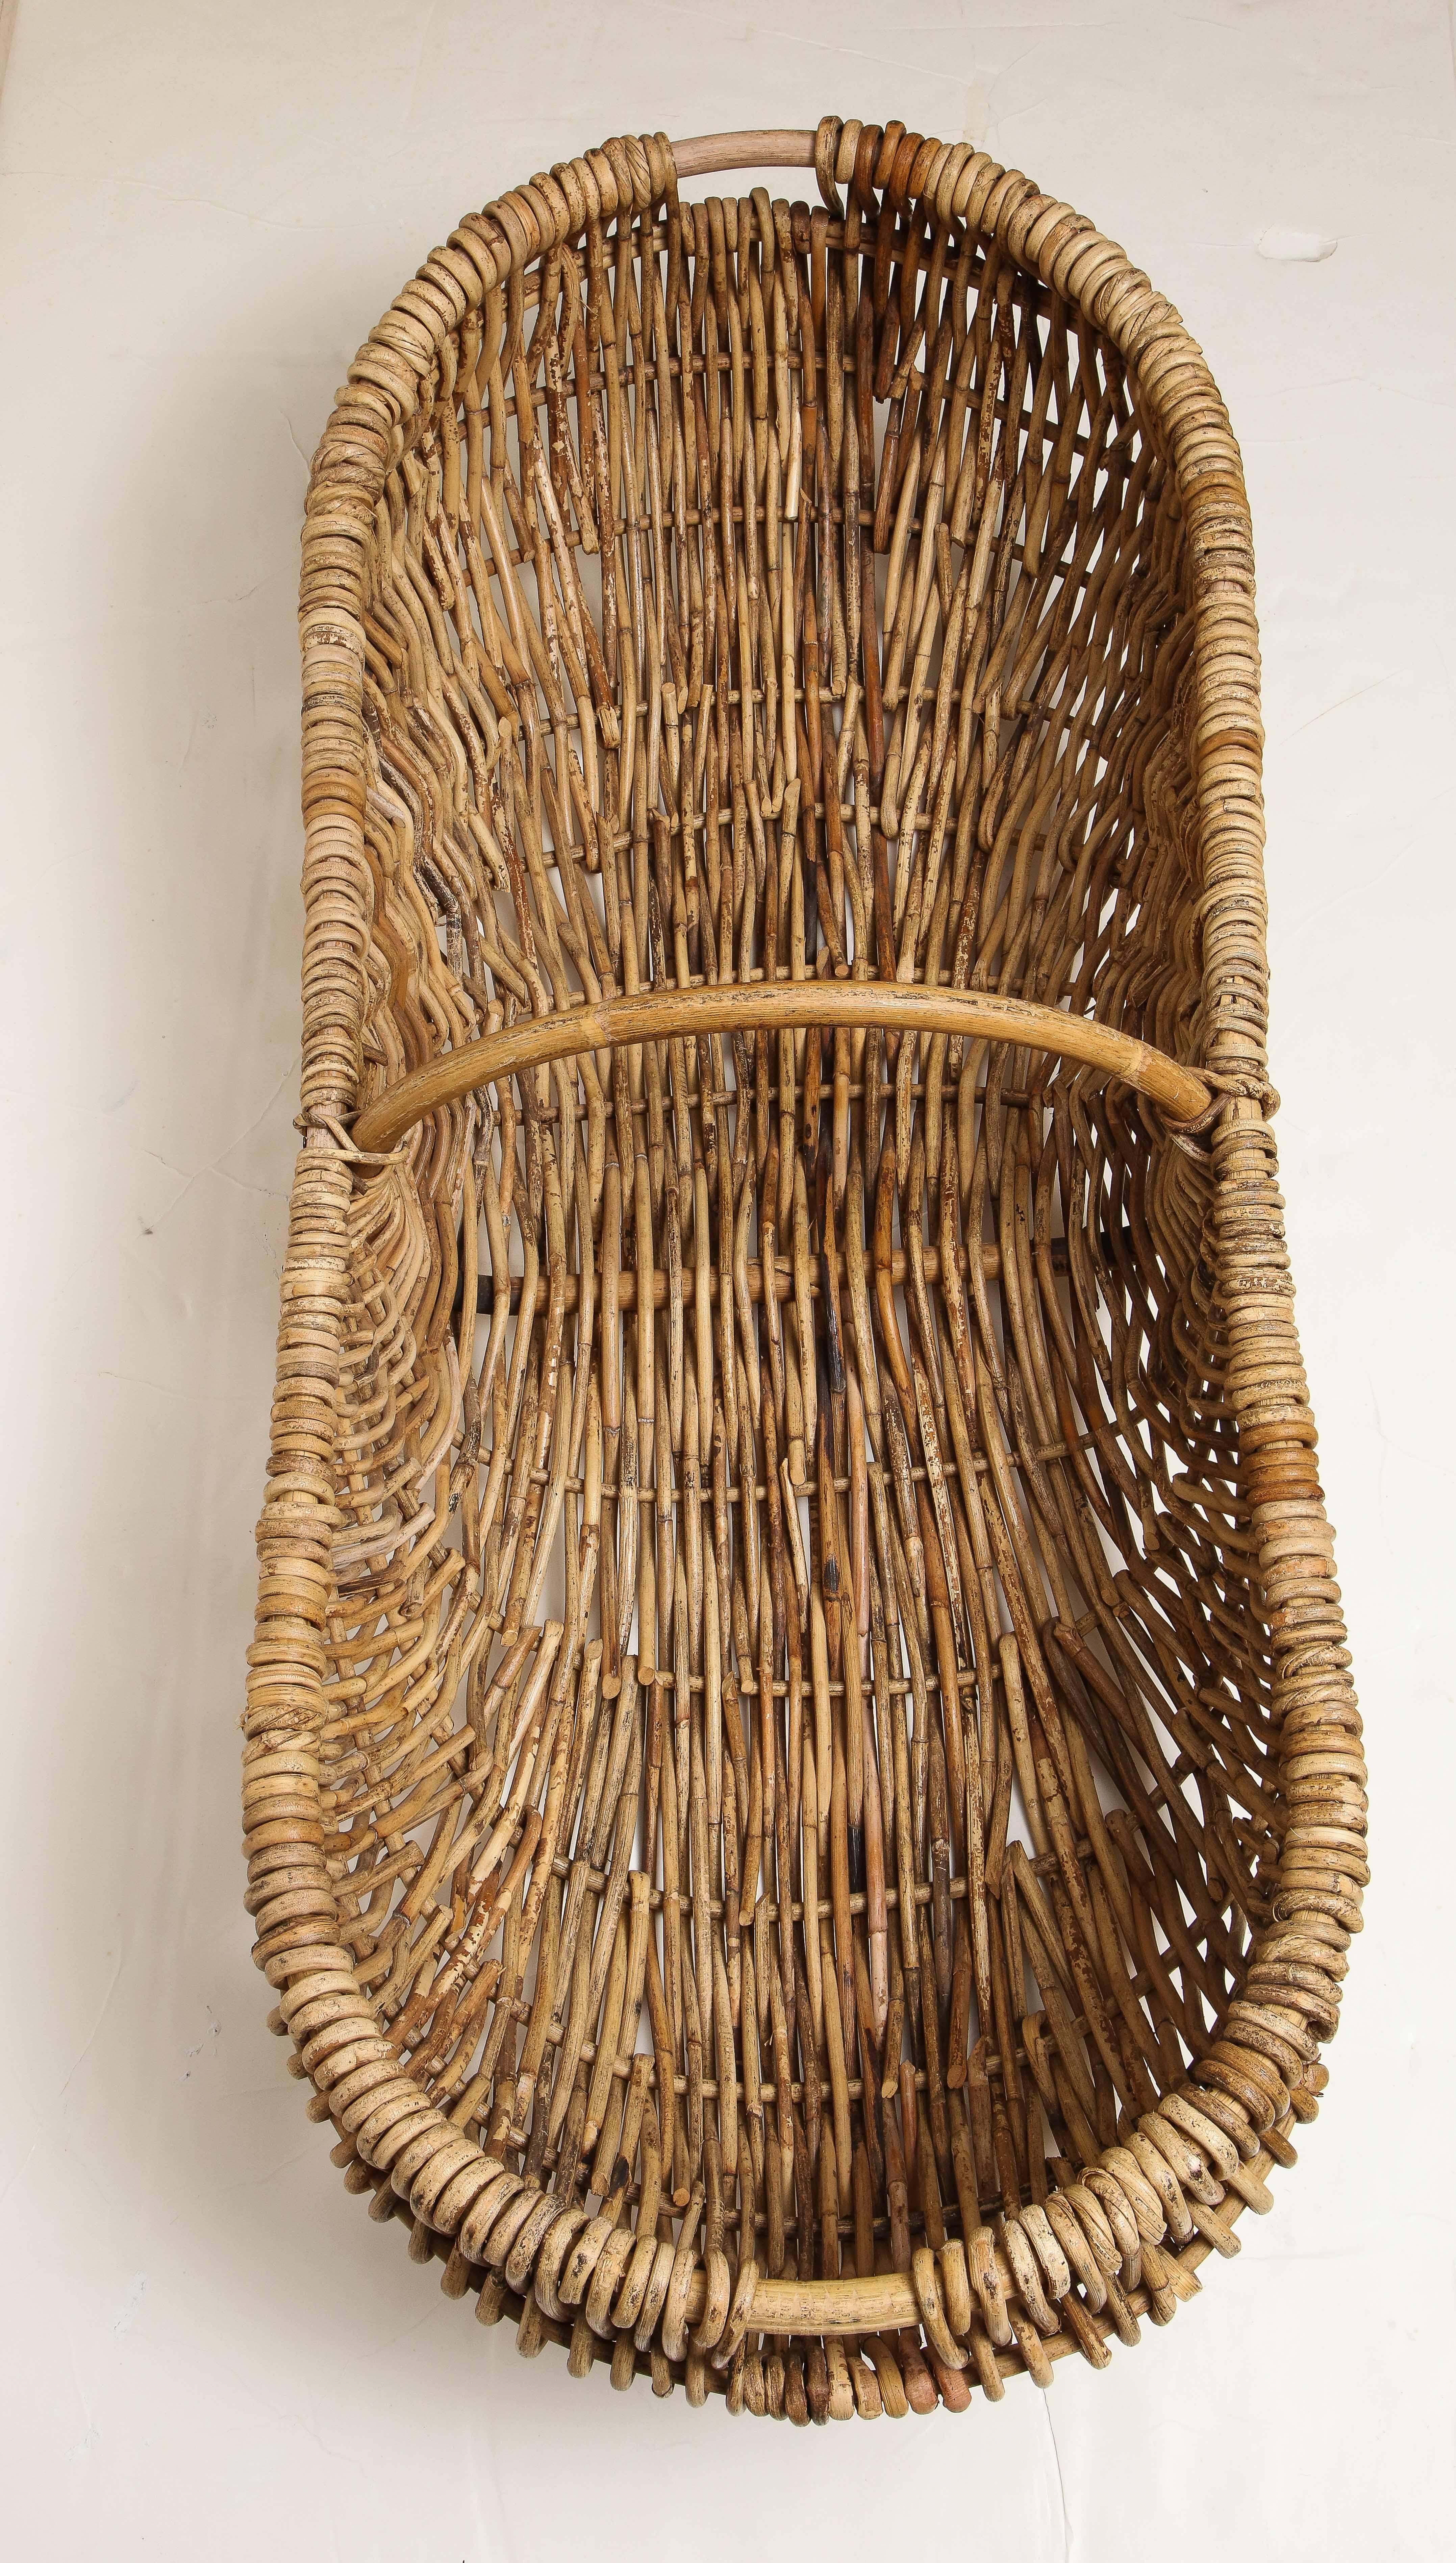 20th Century Large Decorative Wicker Basket